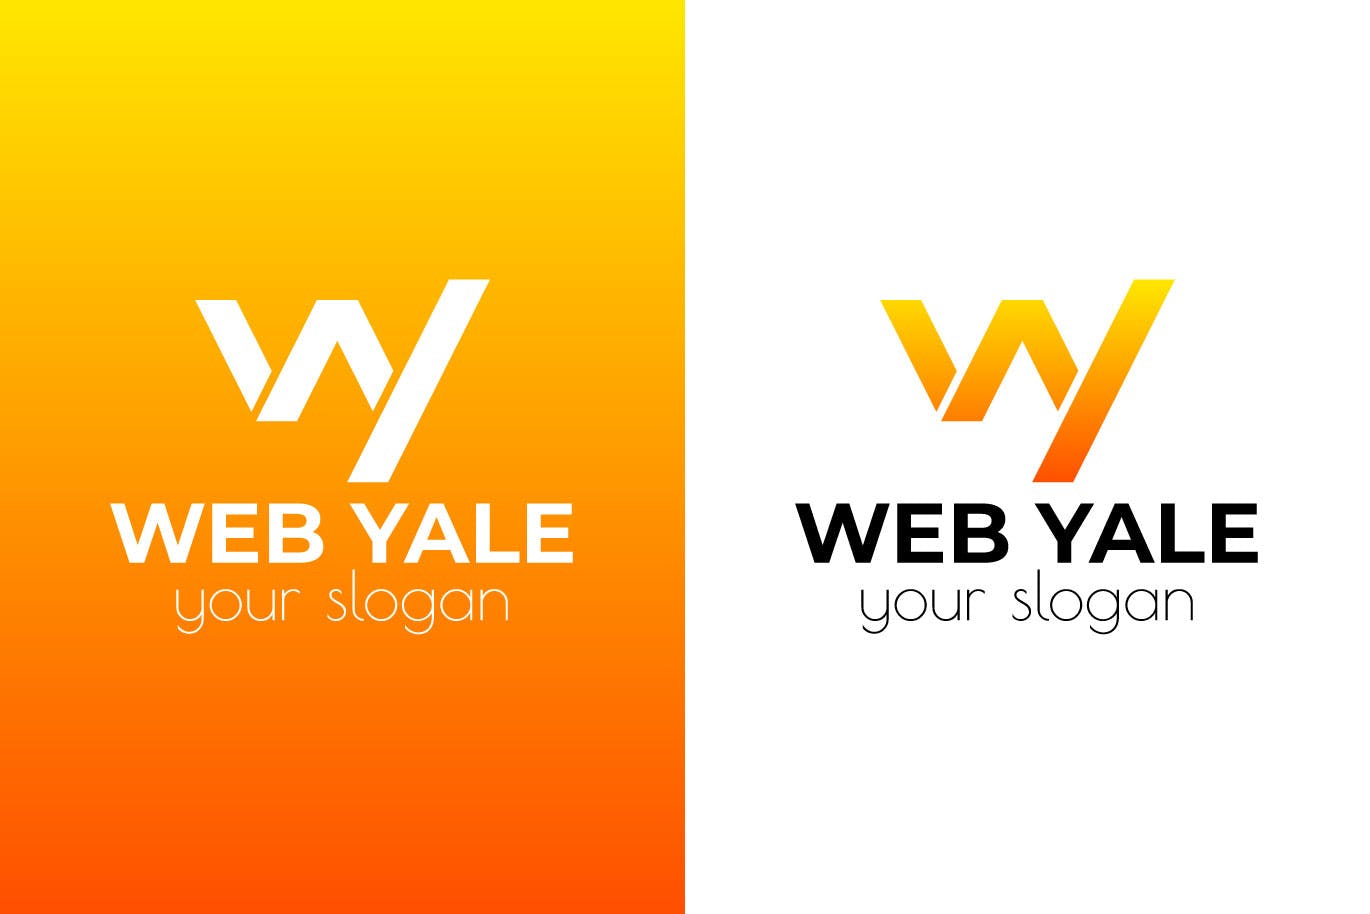 W&Y字母组合几何图形现代Logo设计16图库精选模板 Web Yale Modern Logo Template插图(1)